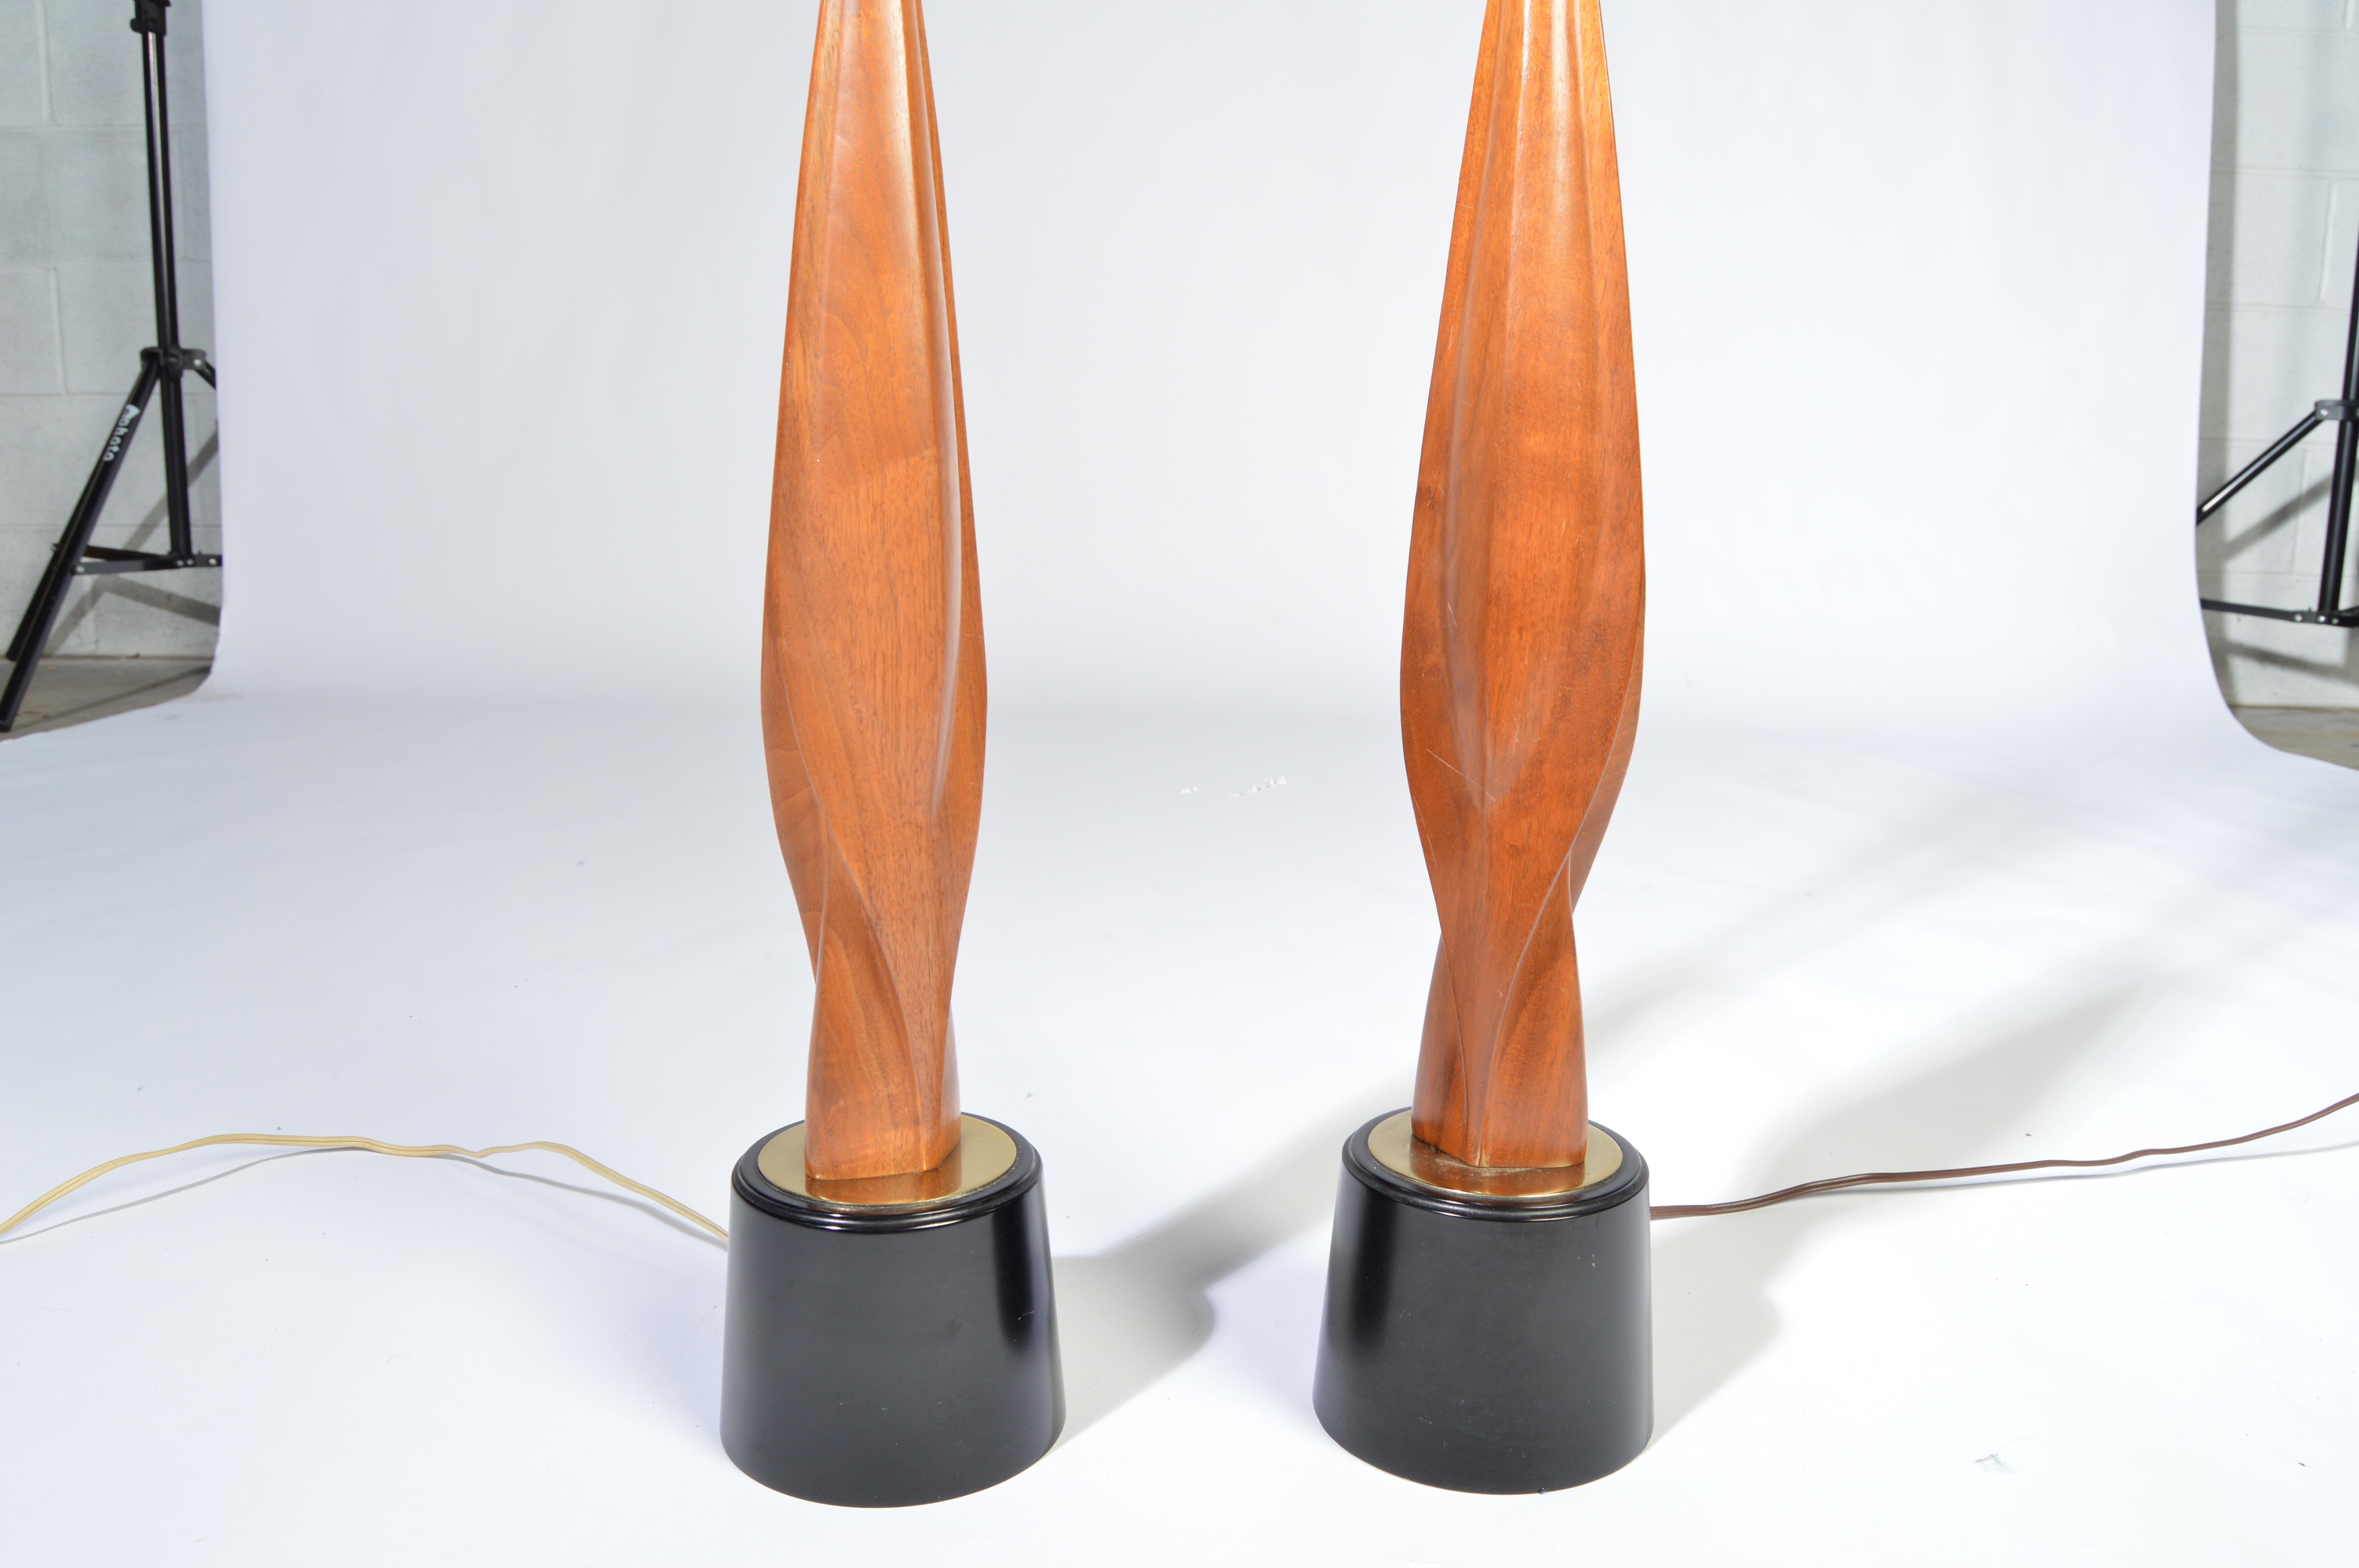 American Laurel Lamp Company Midcentury Sculptural Walnut Table Lamps, circa 1960